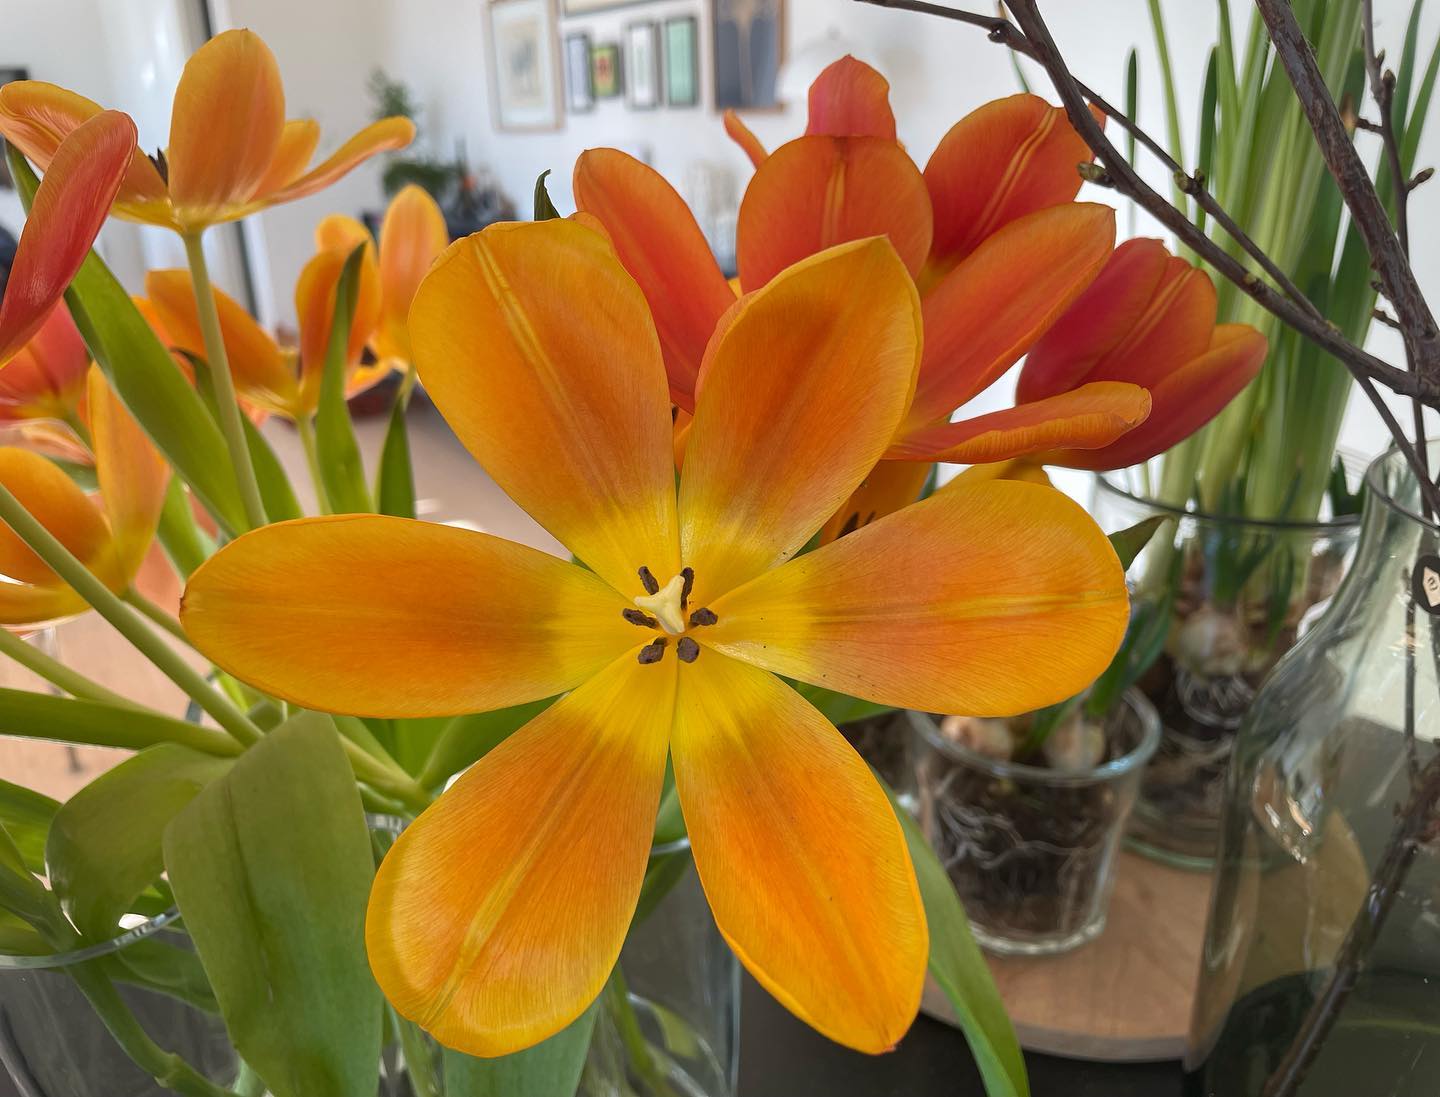 TULIPANER 🧡
•
#countrylivsliv #nårdetergråvejr #tulipaner